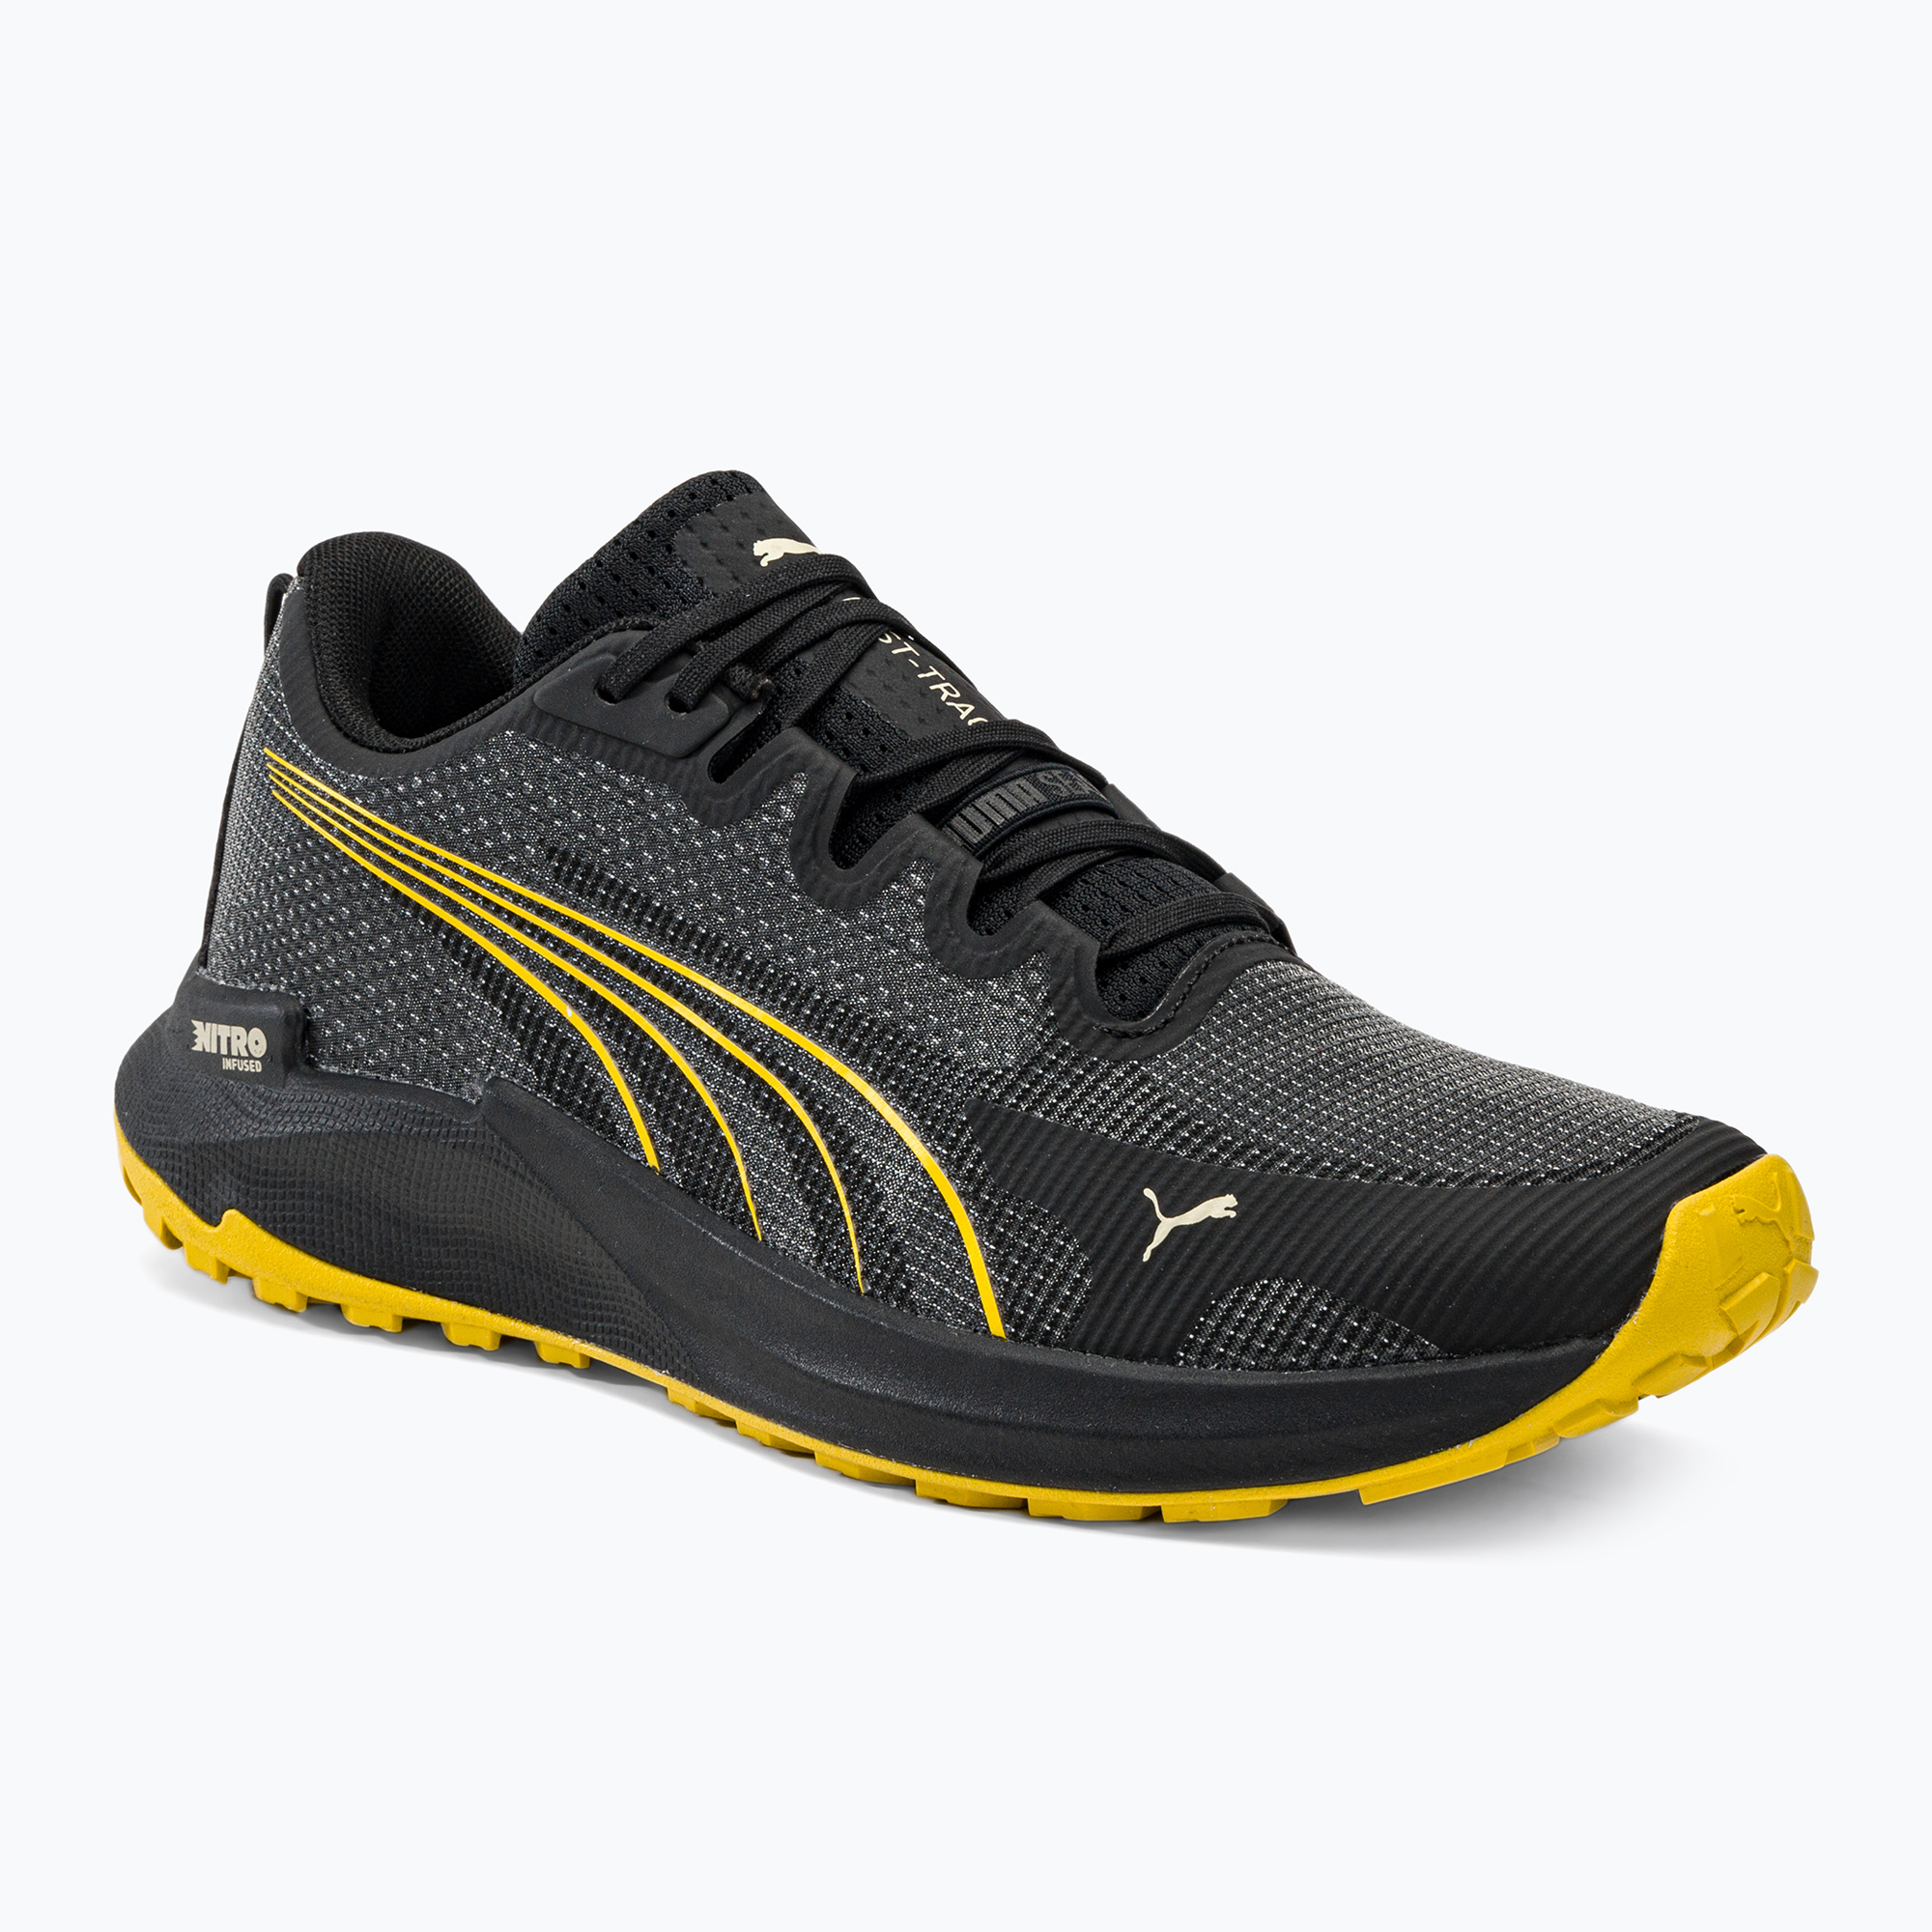 PUMA Fast-Trac Nitro мъжки обувки за бягане puma black/granola/fresh pear